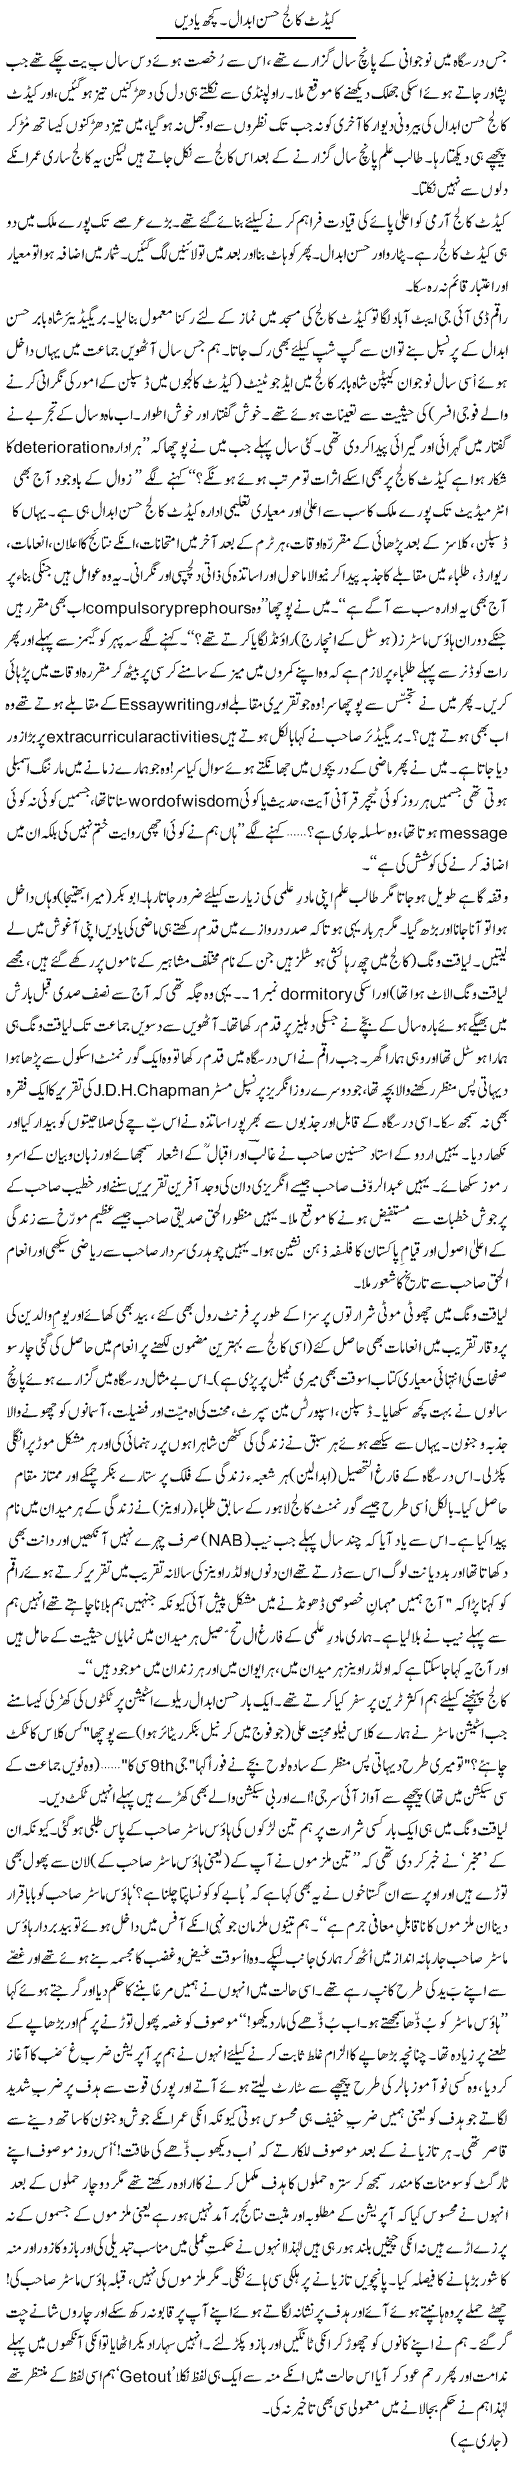 Cadet College Hasan Abdal. Kuch Yaden (1) | Zulfiqar Ahmed Cheema | Daily Urdu Columns